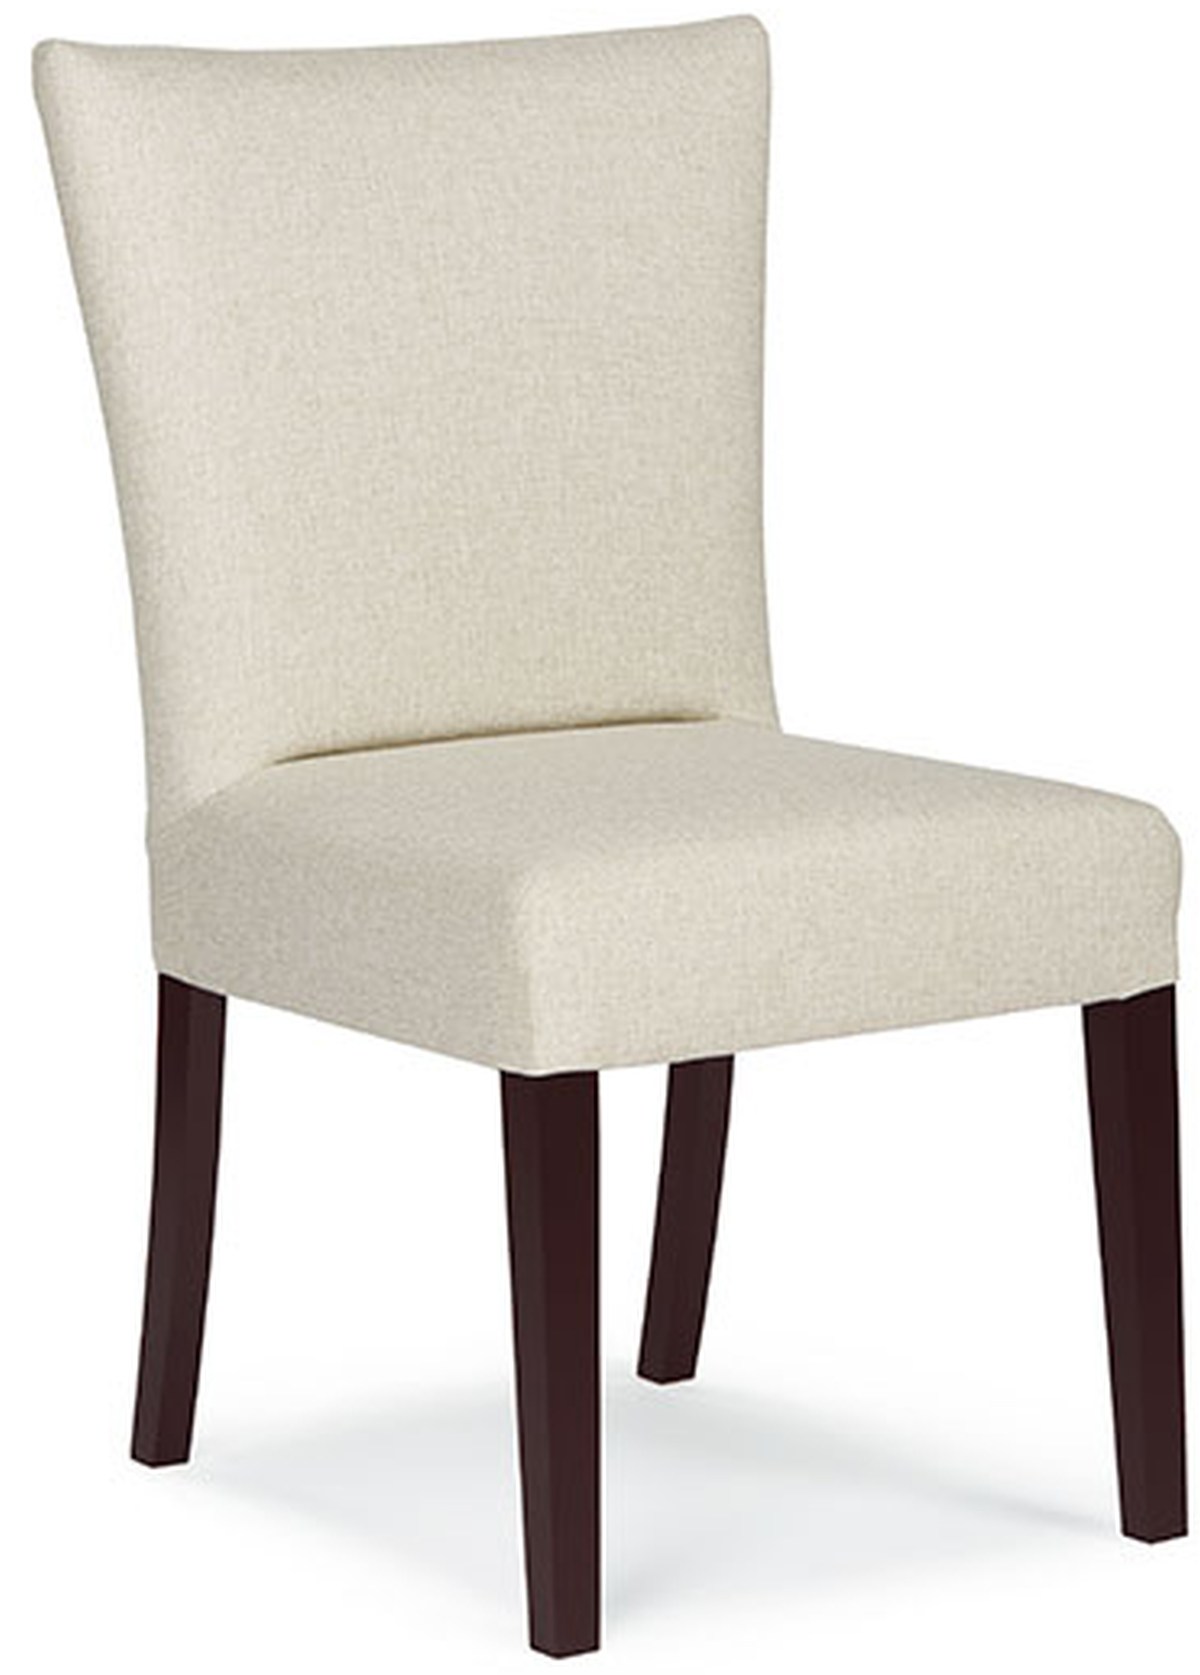 Best™ Home Furnishings Jazla Dining Chair